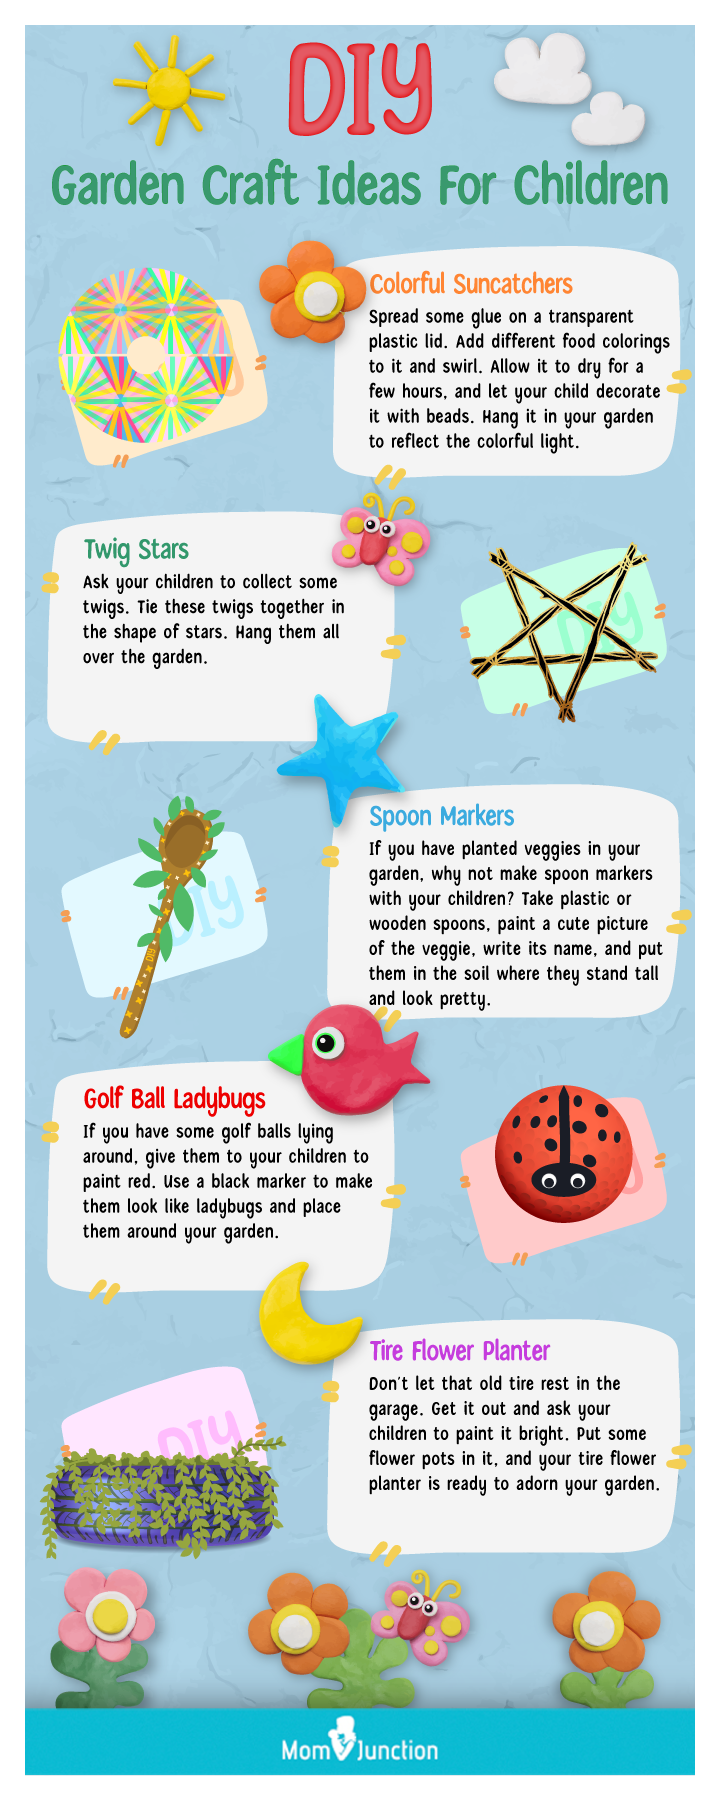 garden ideas for kids (infographic)